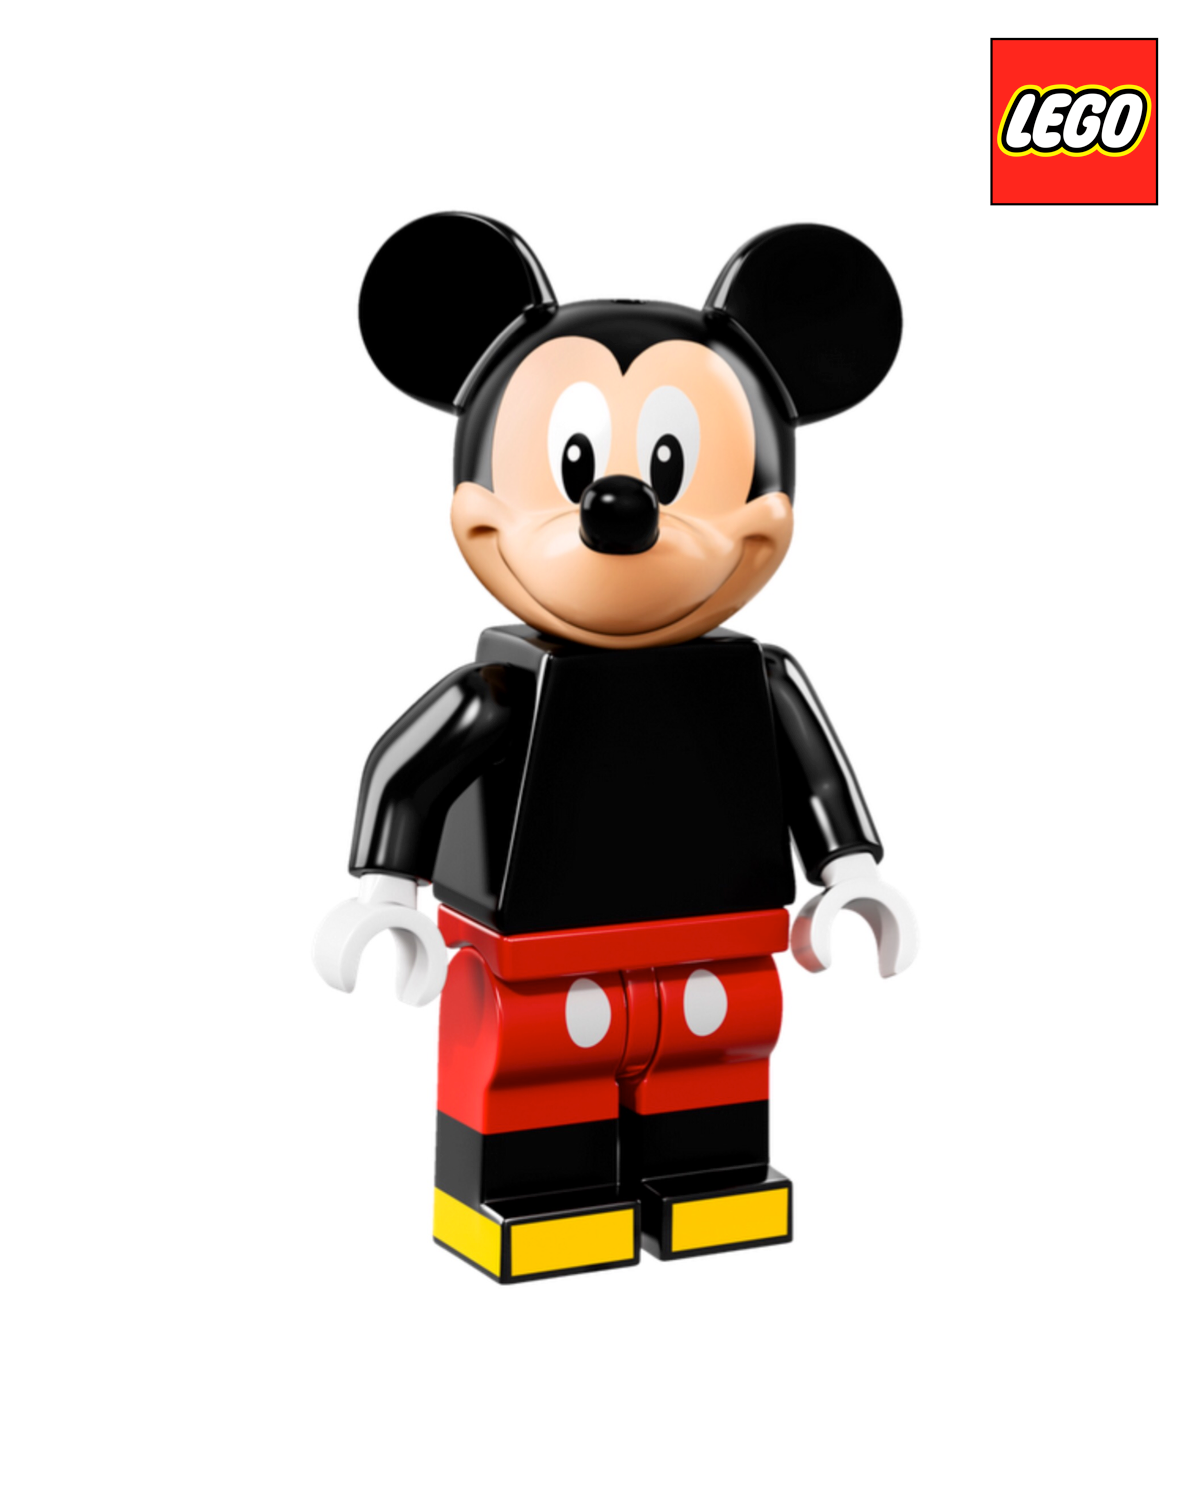 Mickey Mouse - Disney - Series 1  | LEGO Minifigure | NEW CMF